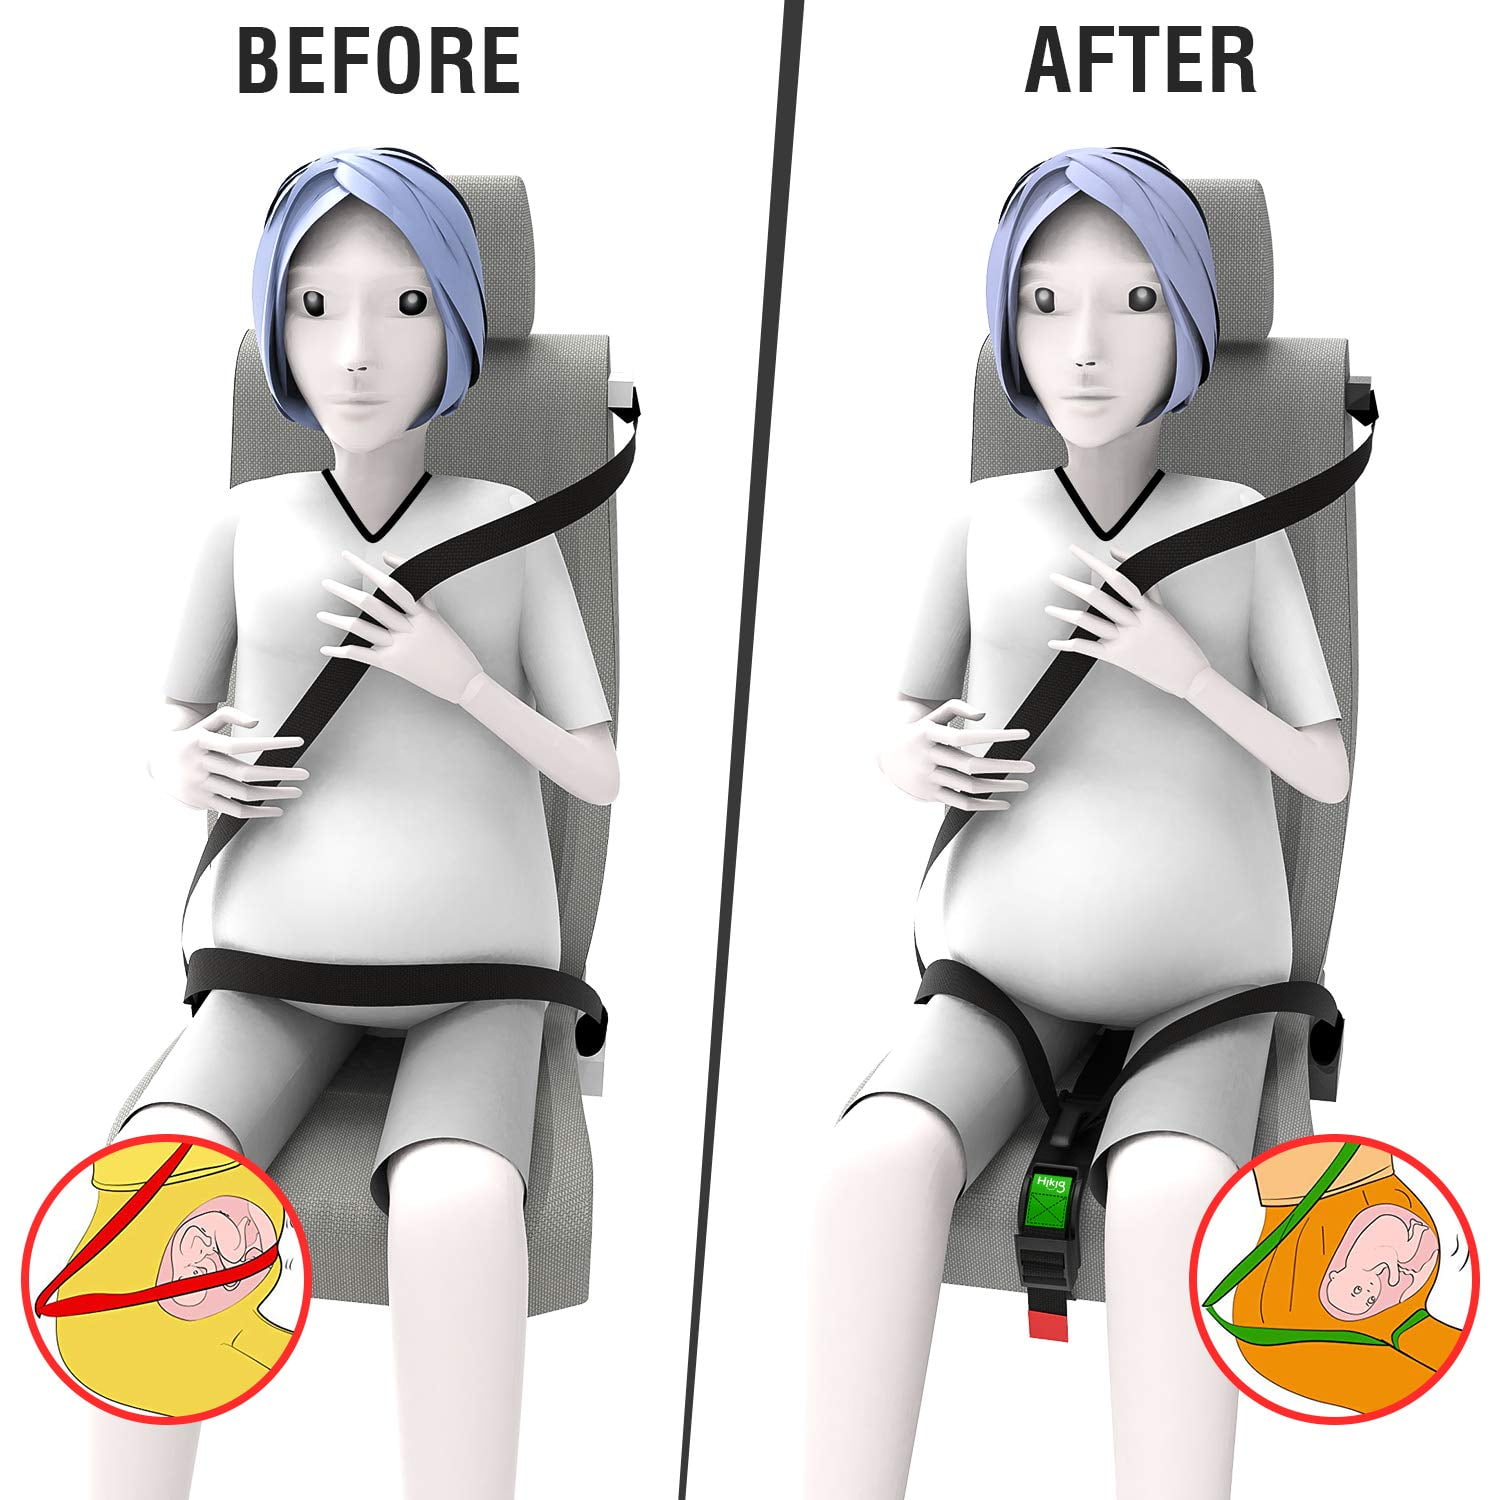 0620〃 BEWBHSDF 2 Pack丨Seat Belt丨Extender Extension丨Easy Installation丨Suitable for Elderly Pregnant Women丨25CM